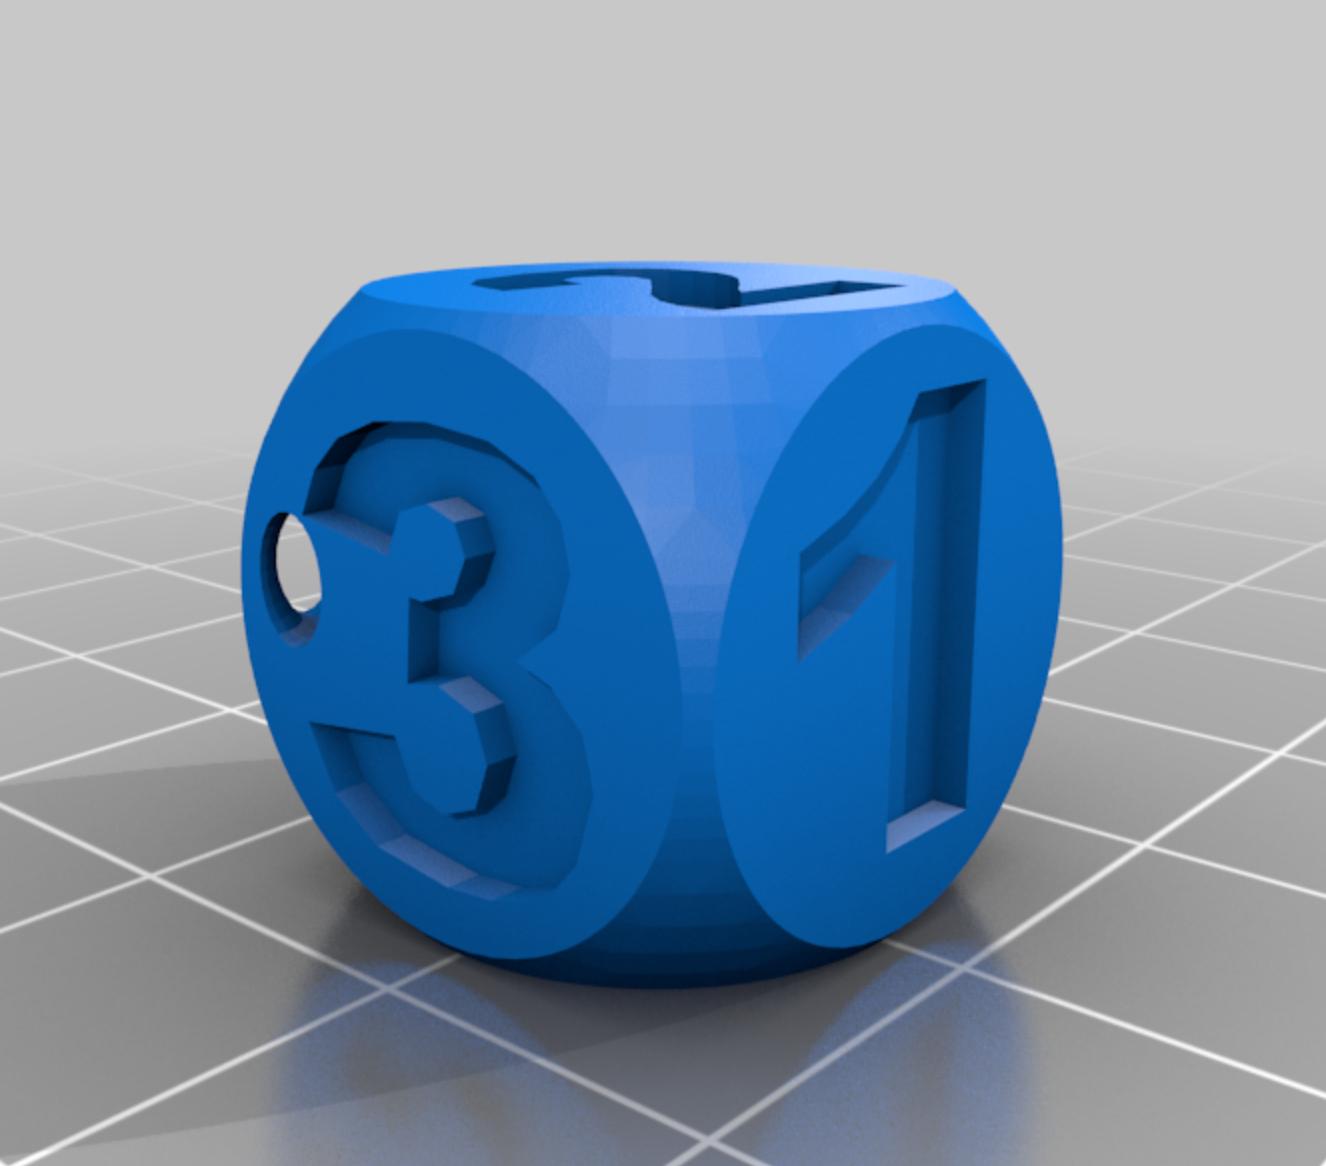 cube dice 3d model